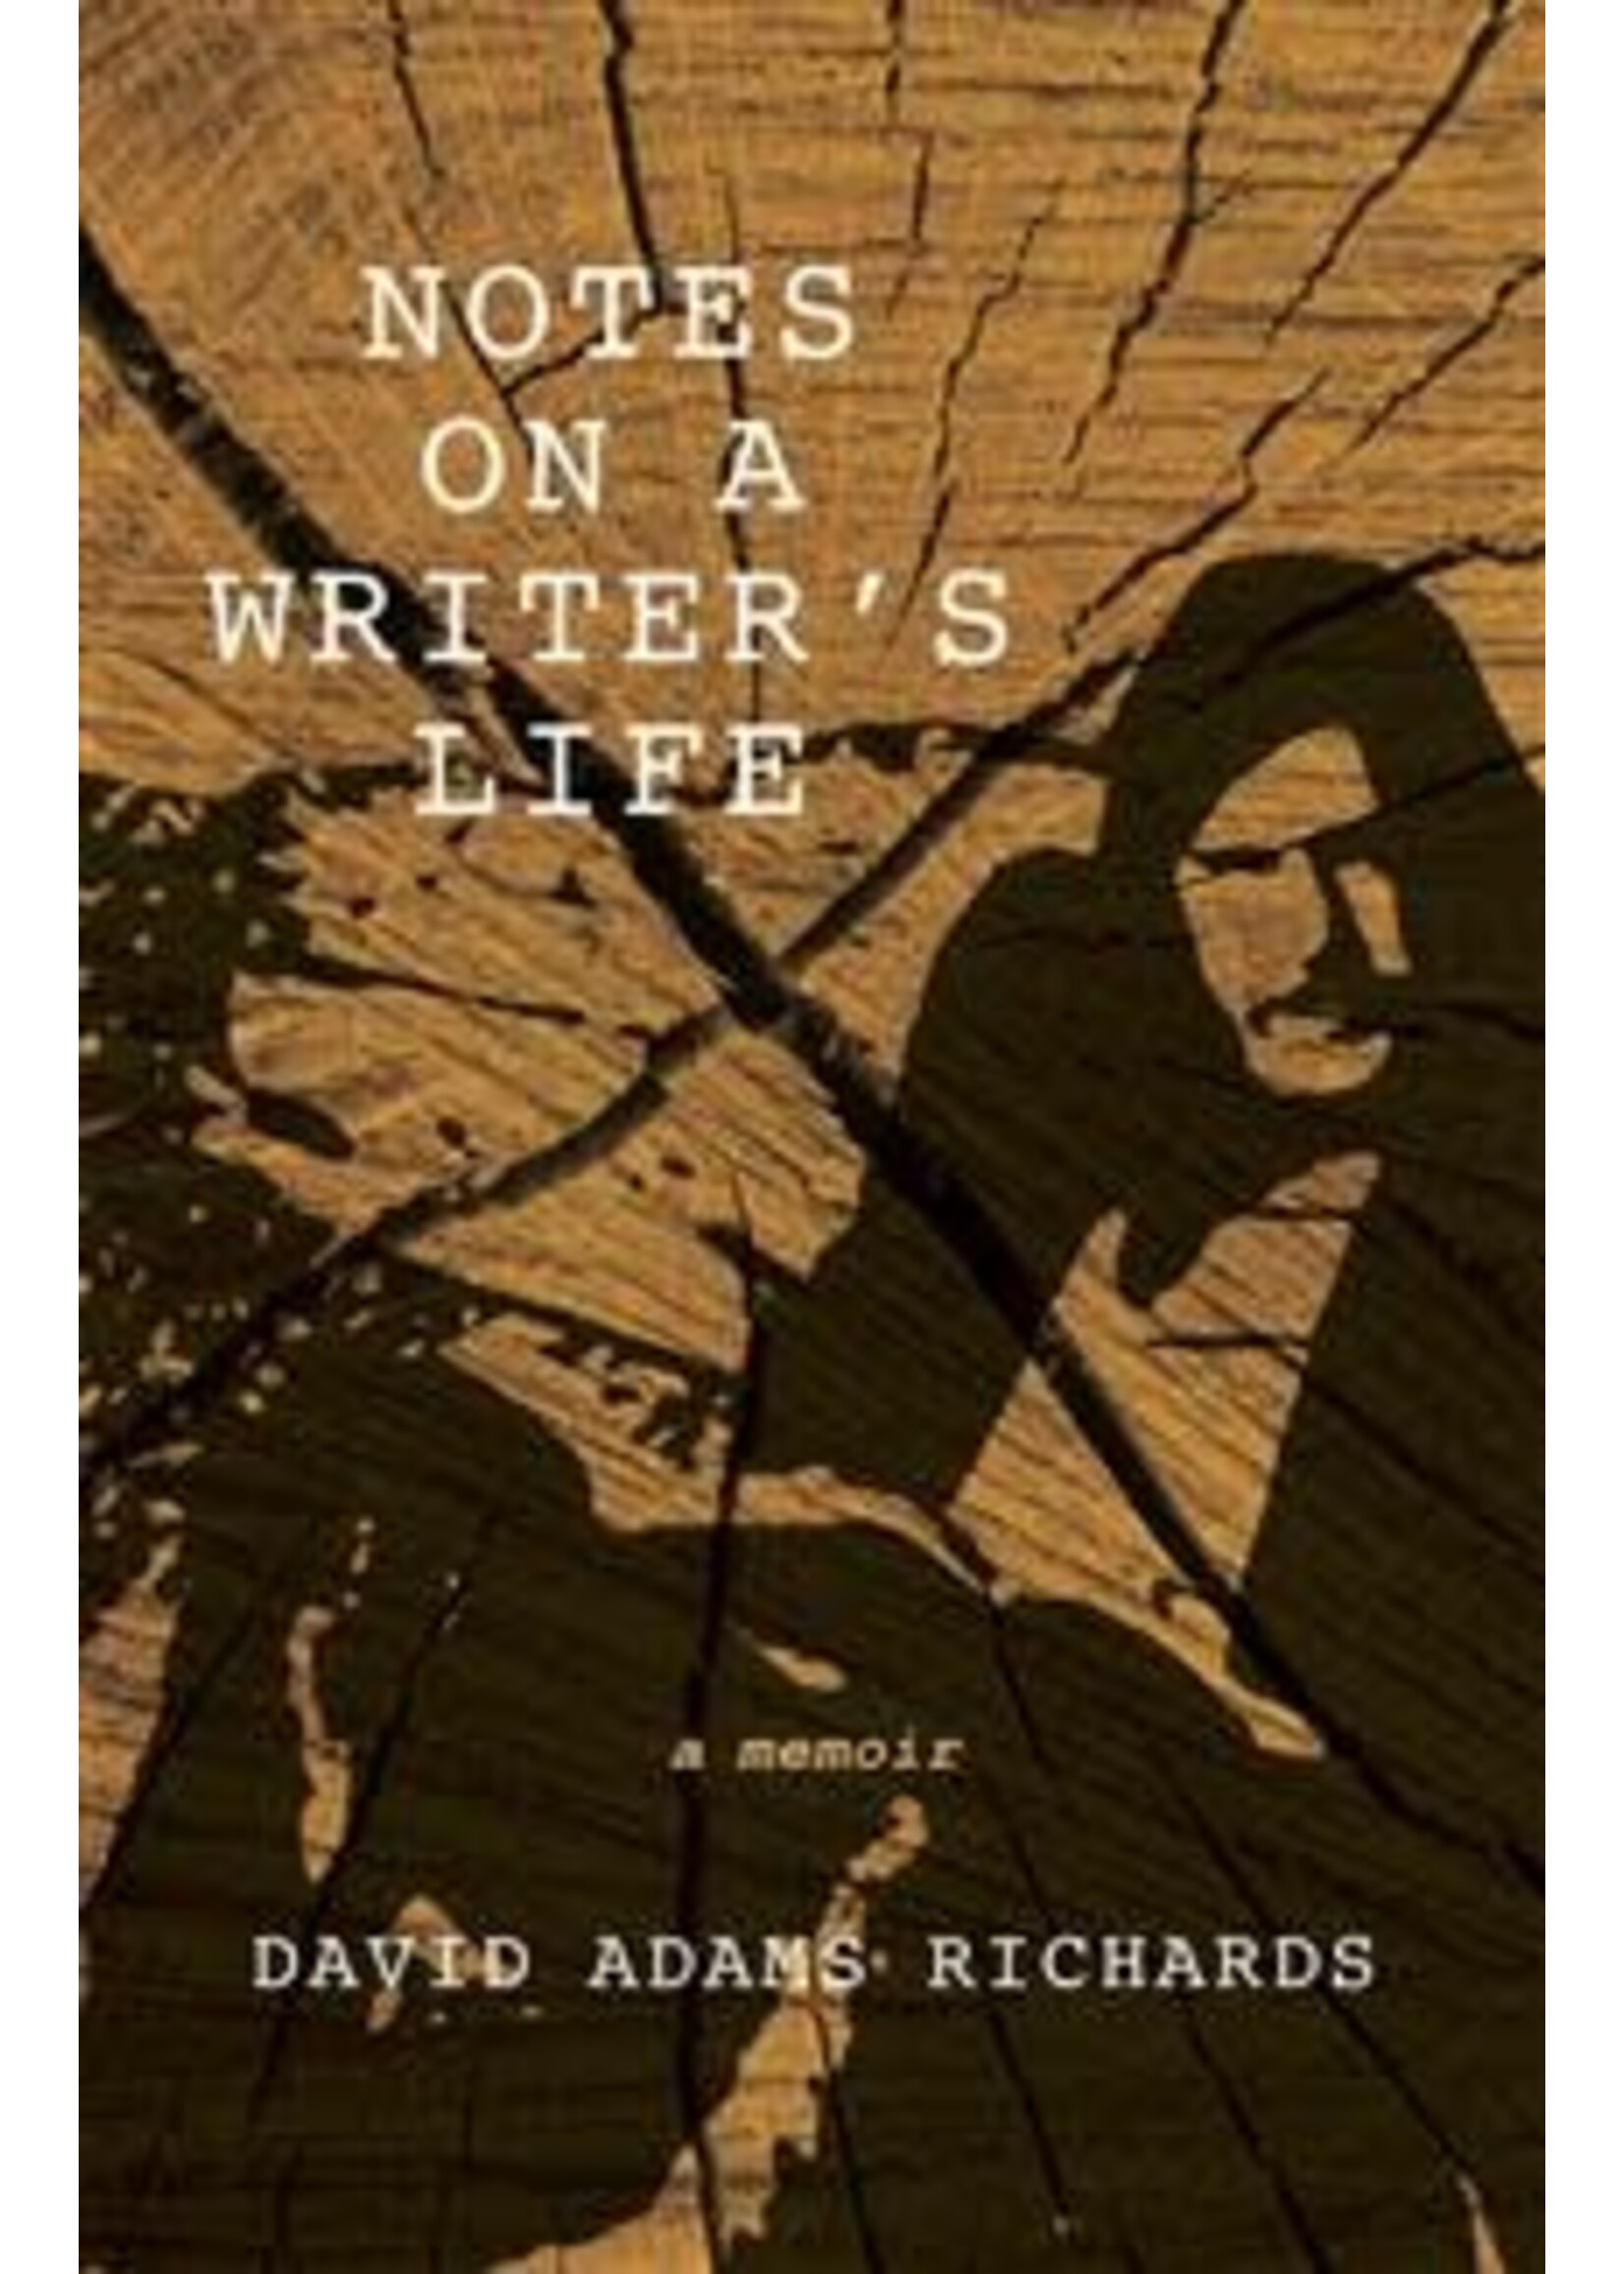 Notes on a Writer's Life: A Memoir by David Adams Richards